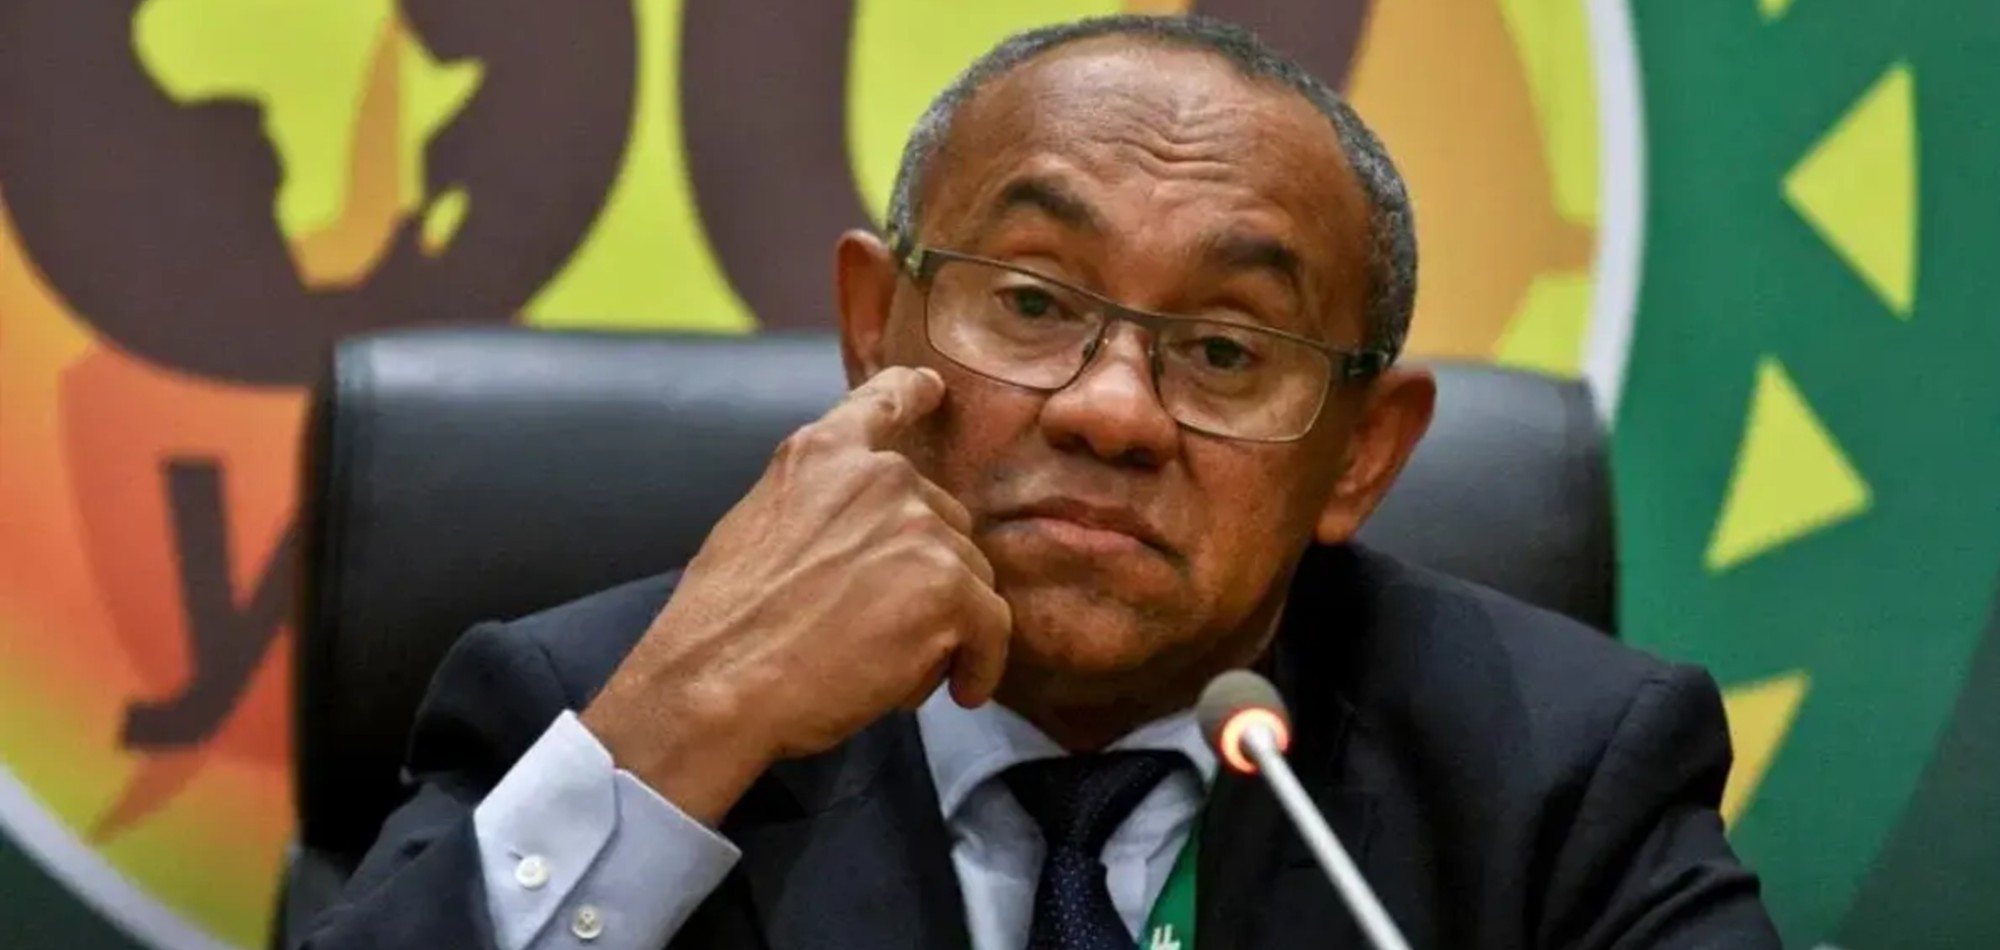 FIFA ban African football head Ahmad Ahmad for five years after ethics investigation 